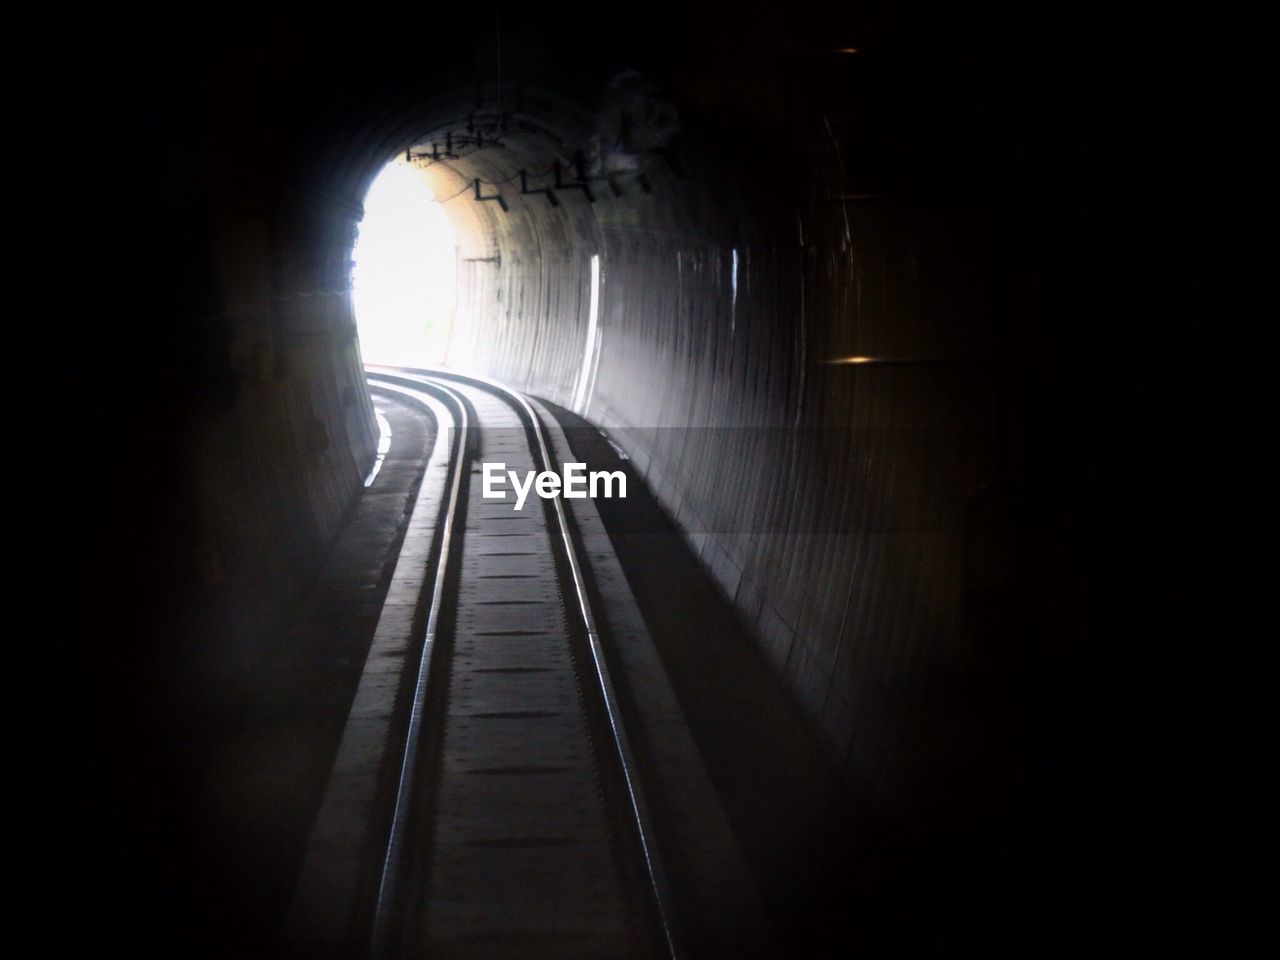 Railroad tracks passing through a tunnel